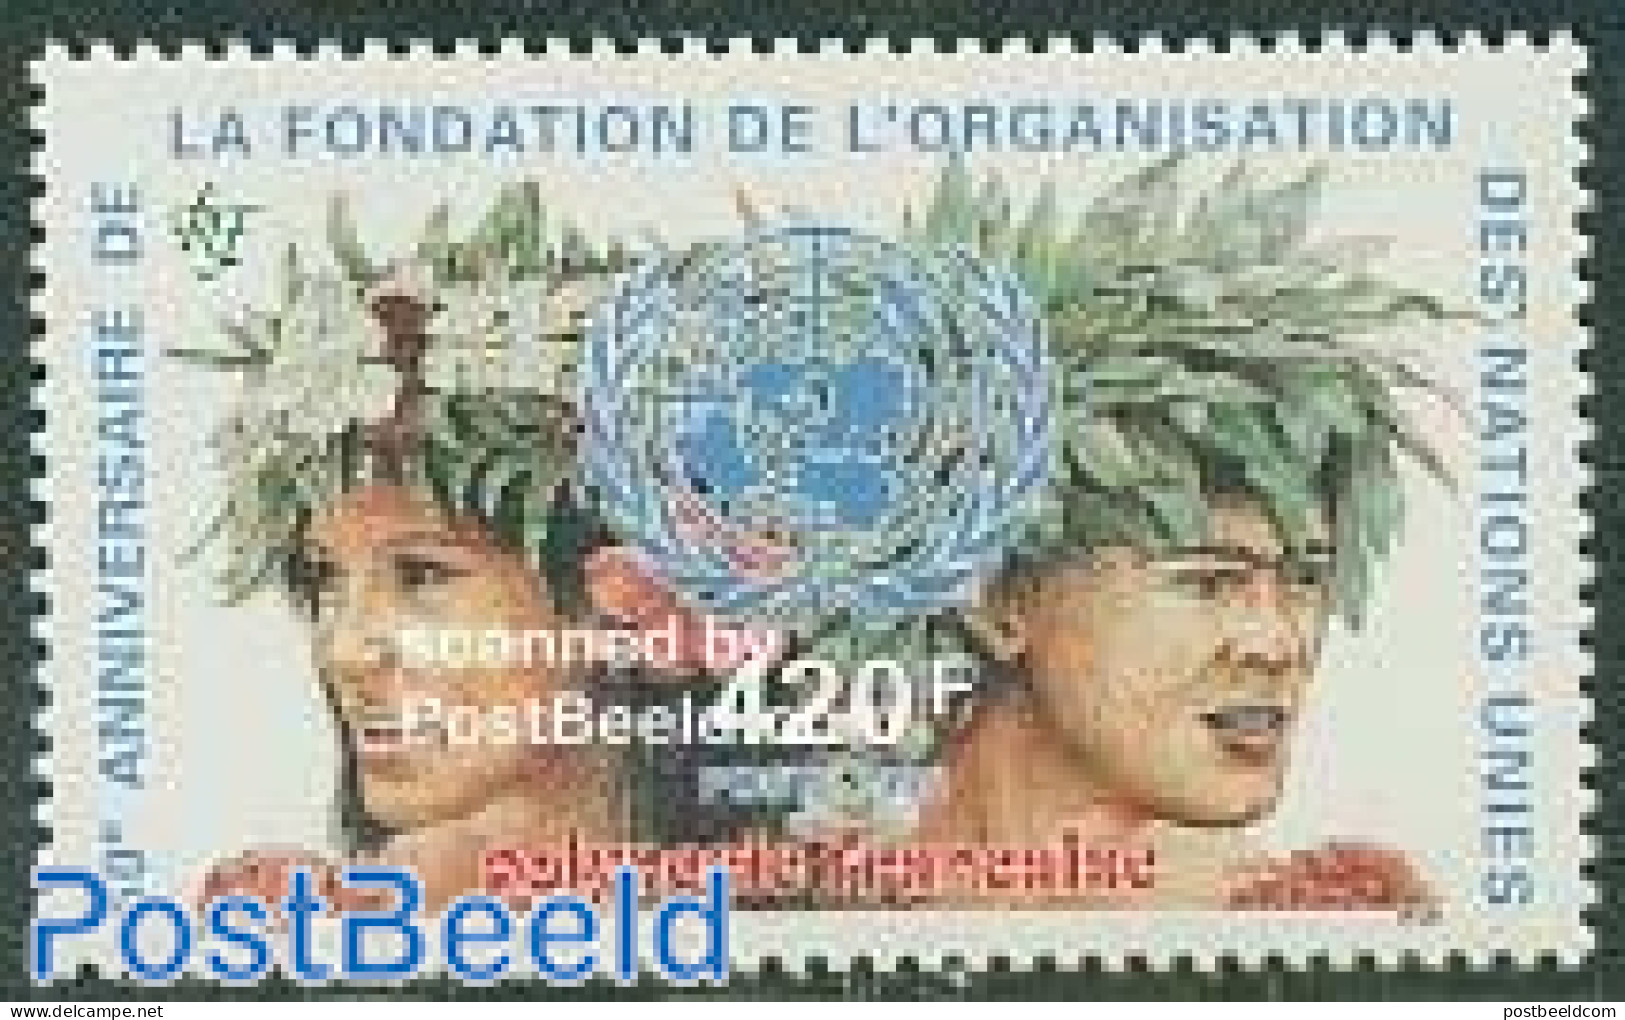 French Polynesia 1995 50 Years UNO 1v, Mint NH, History - United Nations - Ongebruikt